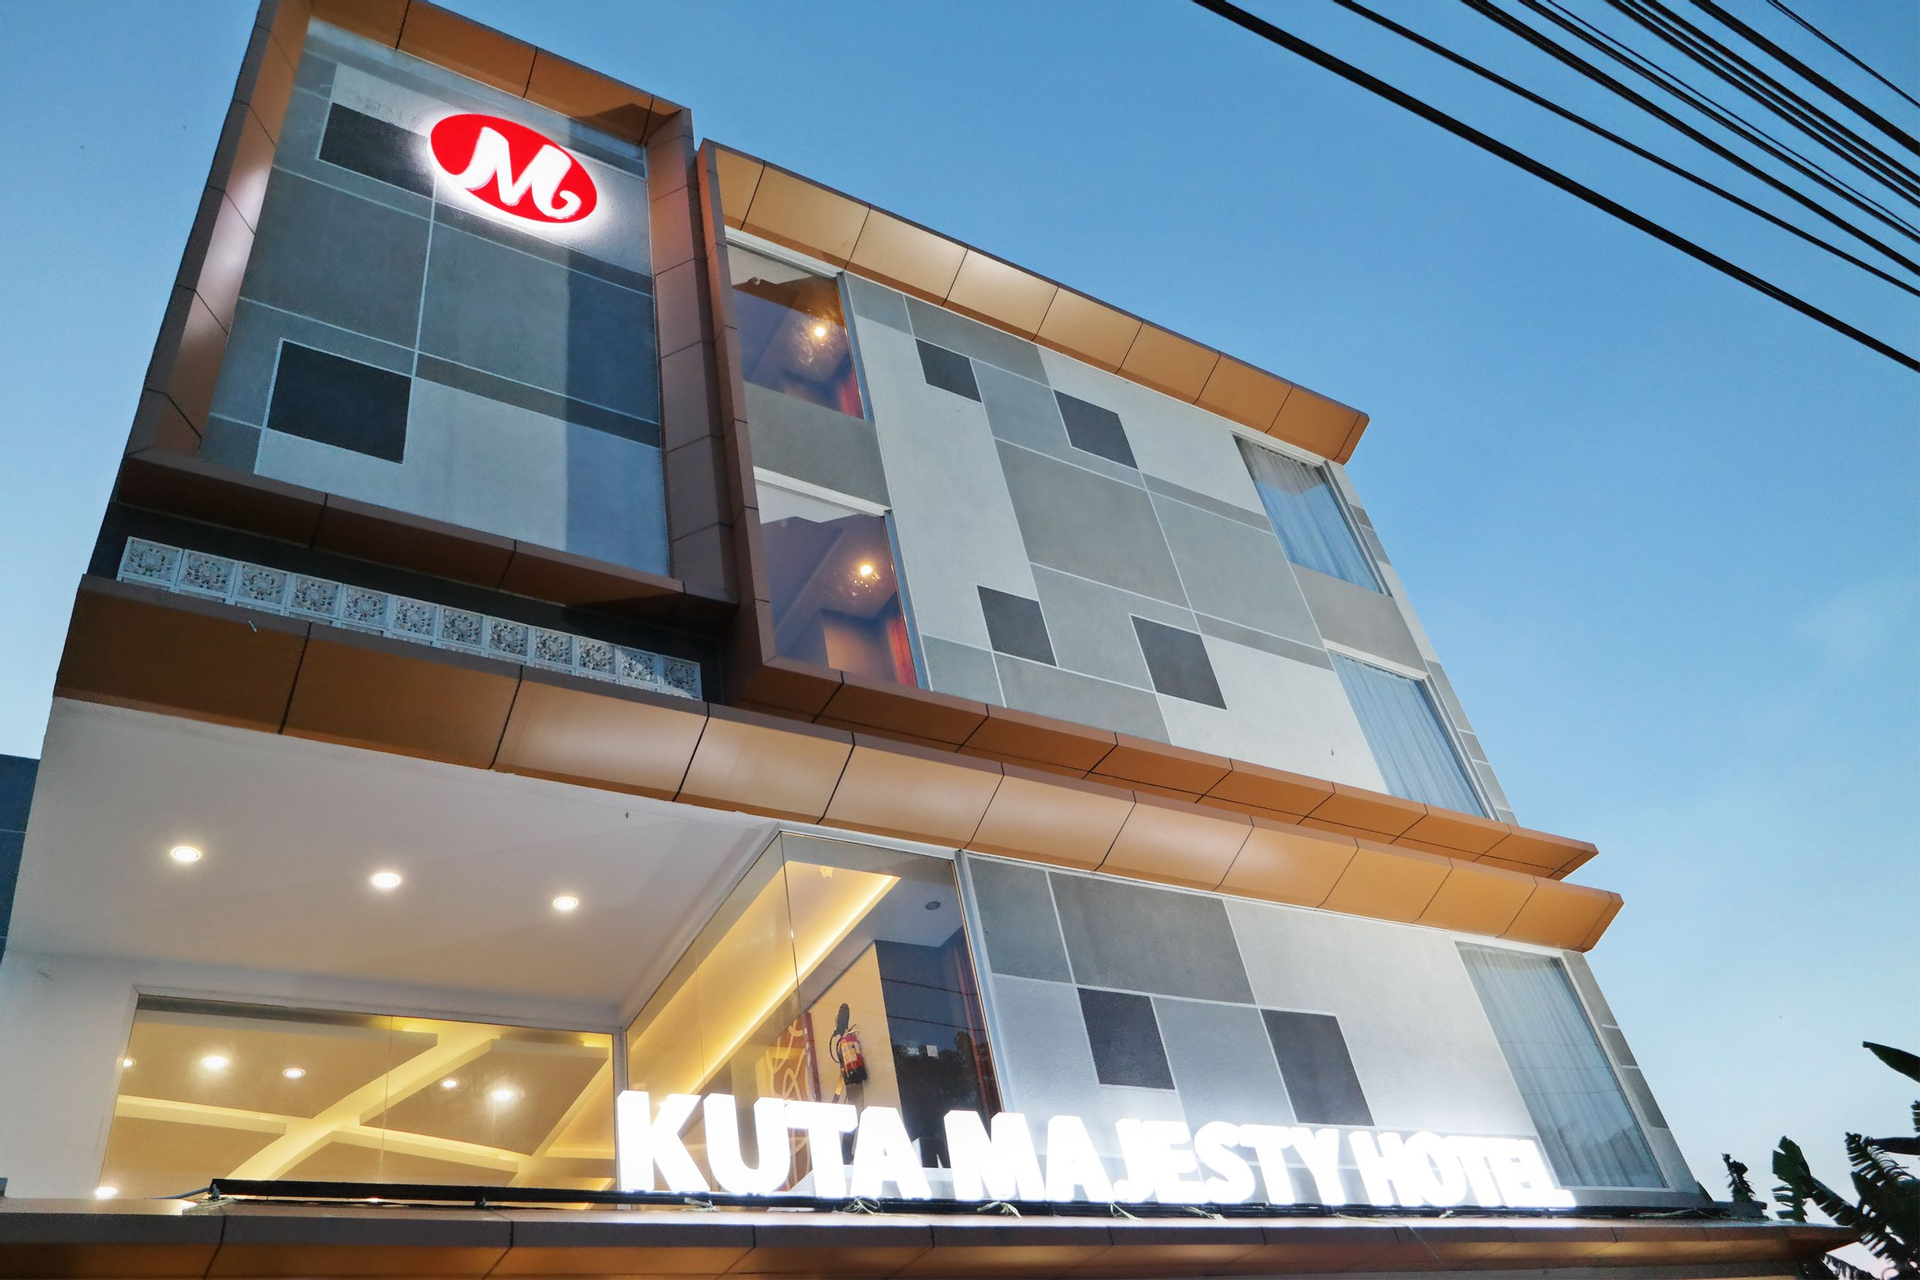 Exterior & Views, Kuta Majesty Hotel, Badung